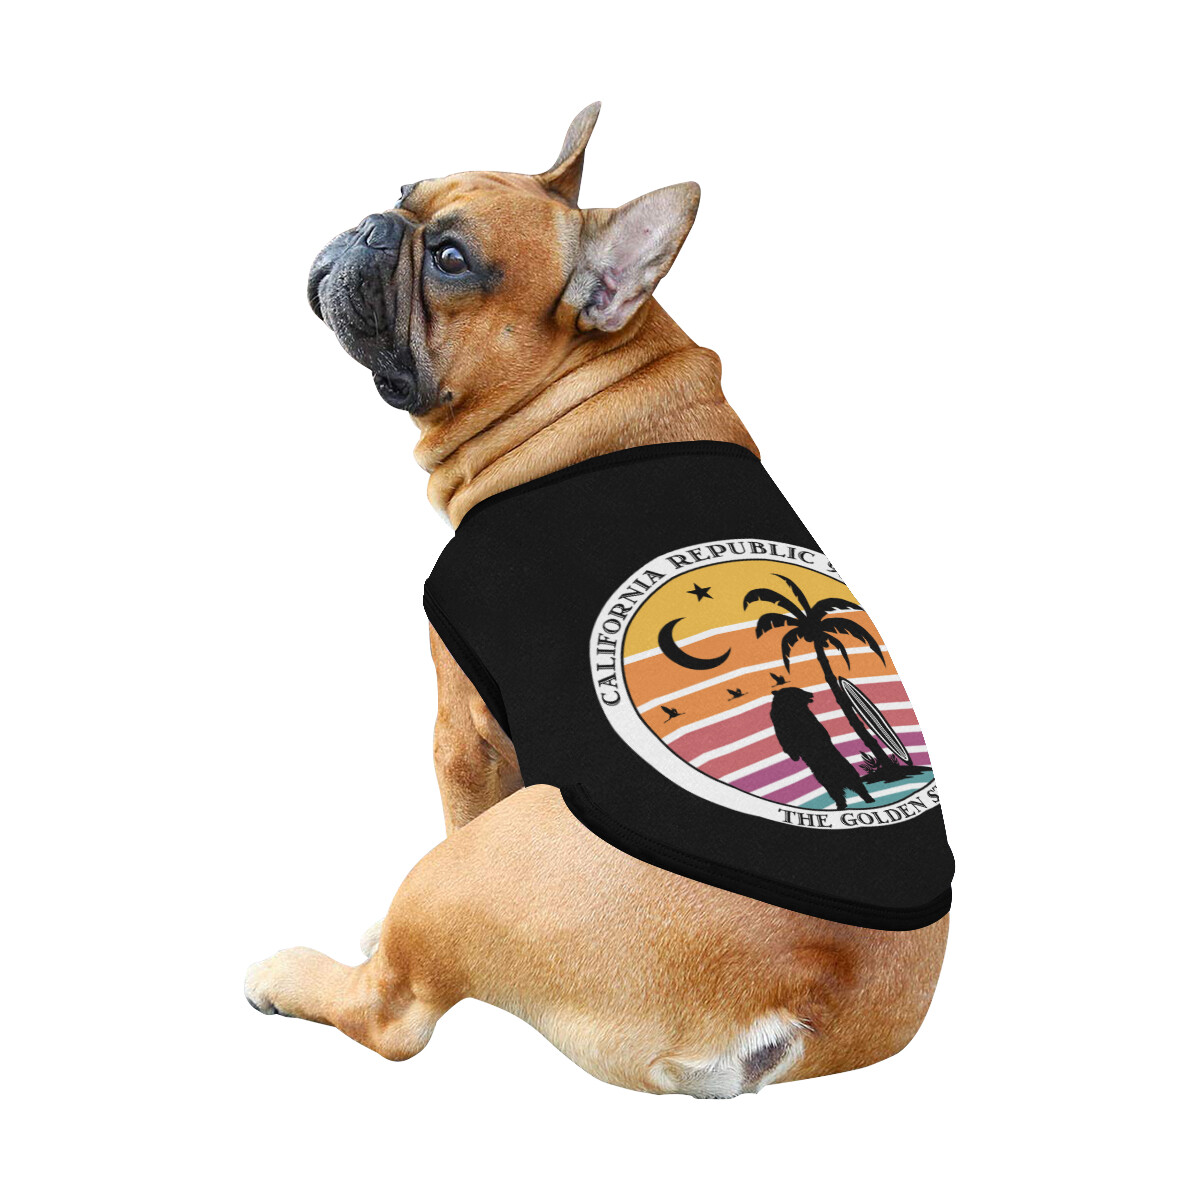 🐕 California Republic The Golden State Dog t-shirt, Dog Tank Top, Dog shirt, Dog clothes, Gifts, front back print, 7 sizes XS to 3XL dog t-shirt, white/black